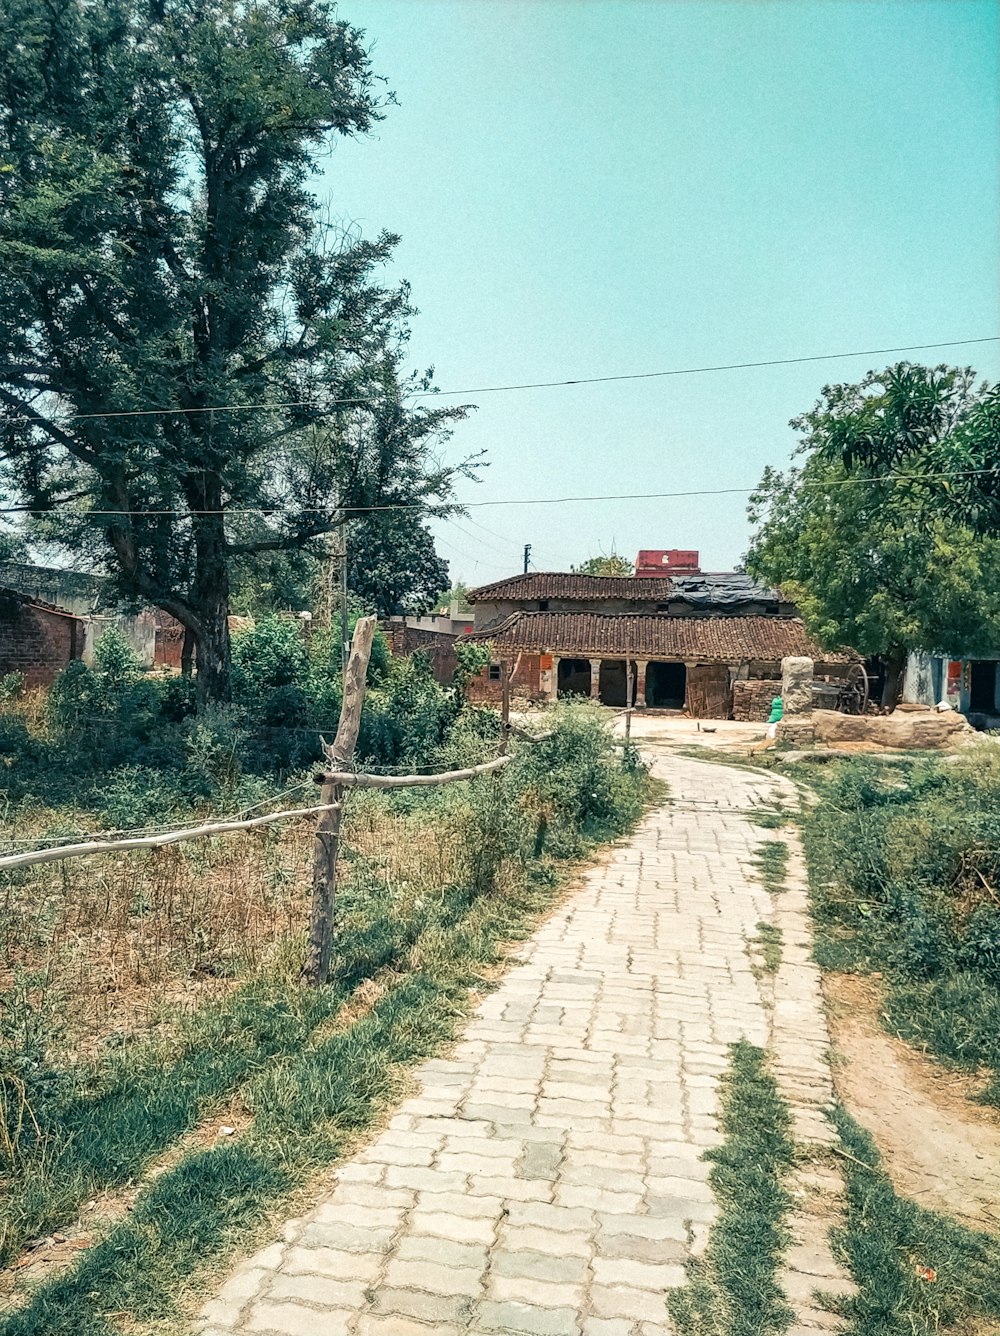 a brick path leading to a house